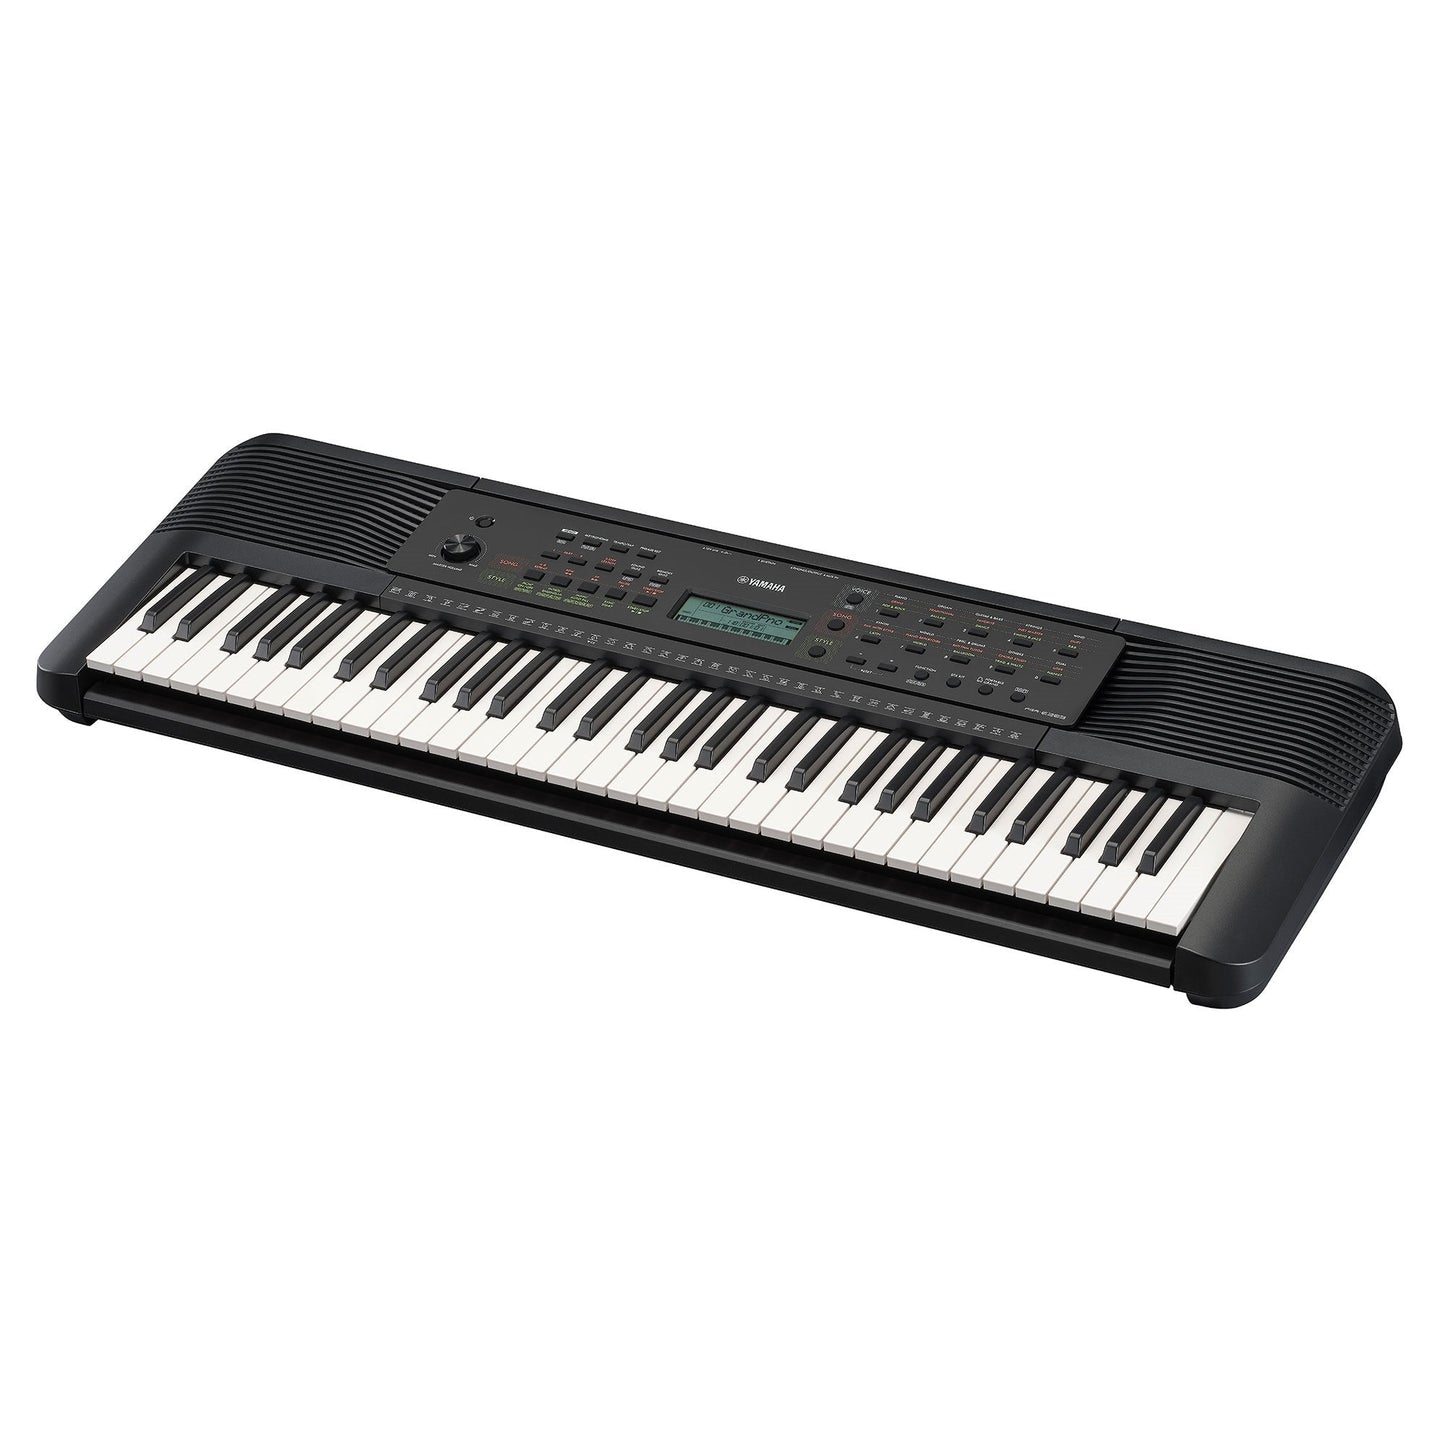 [DEMO UNIT] Yamaha PSR-e283 61-Key Portable Keyboard